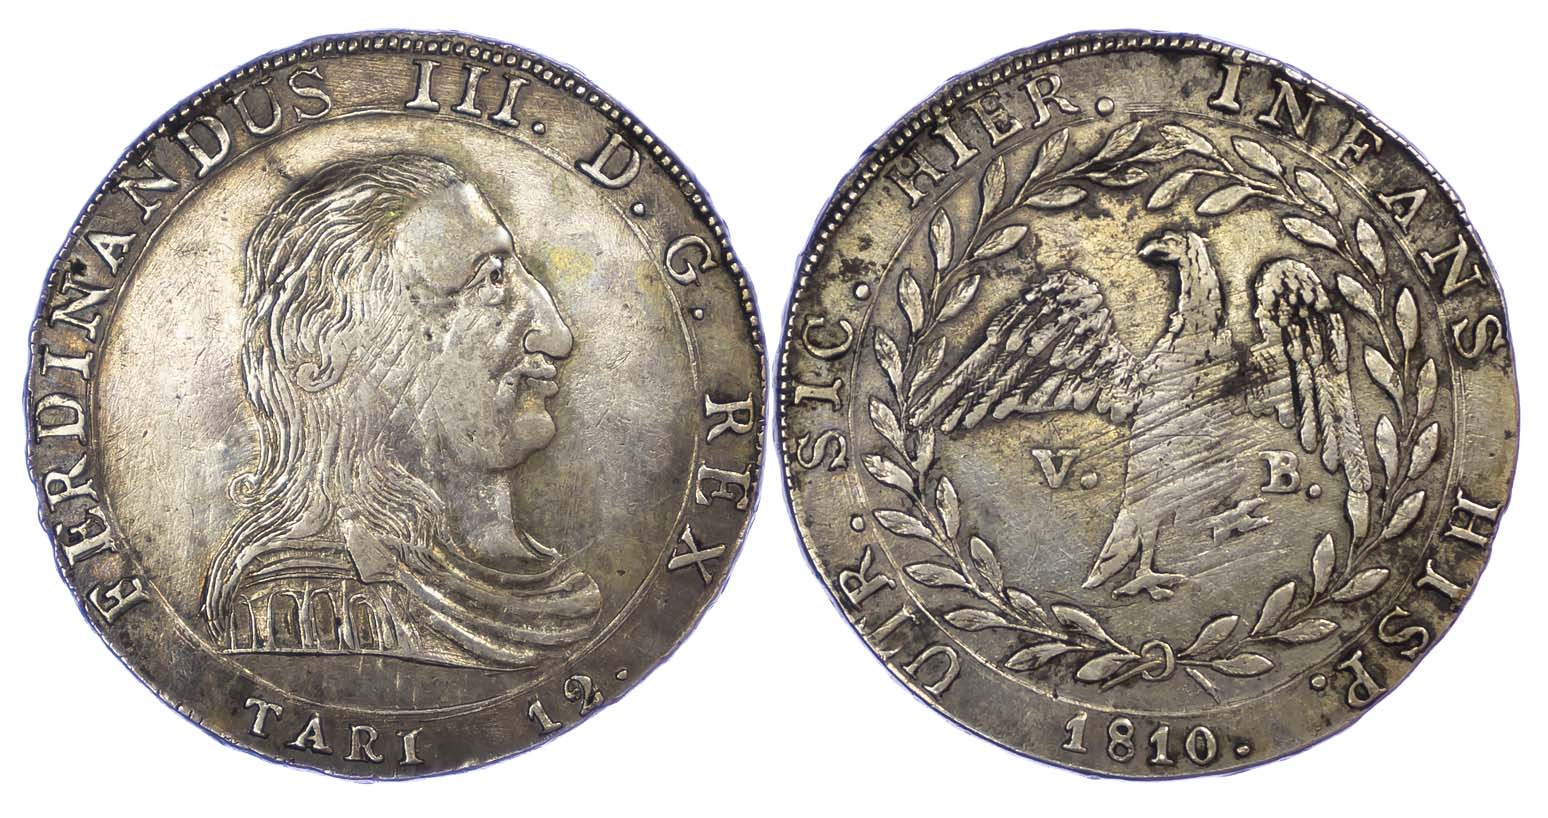 Italy, Sicily, 1810 Silver Piastra of 12 Tari